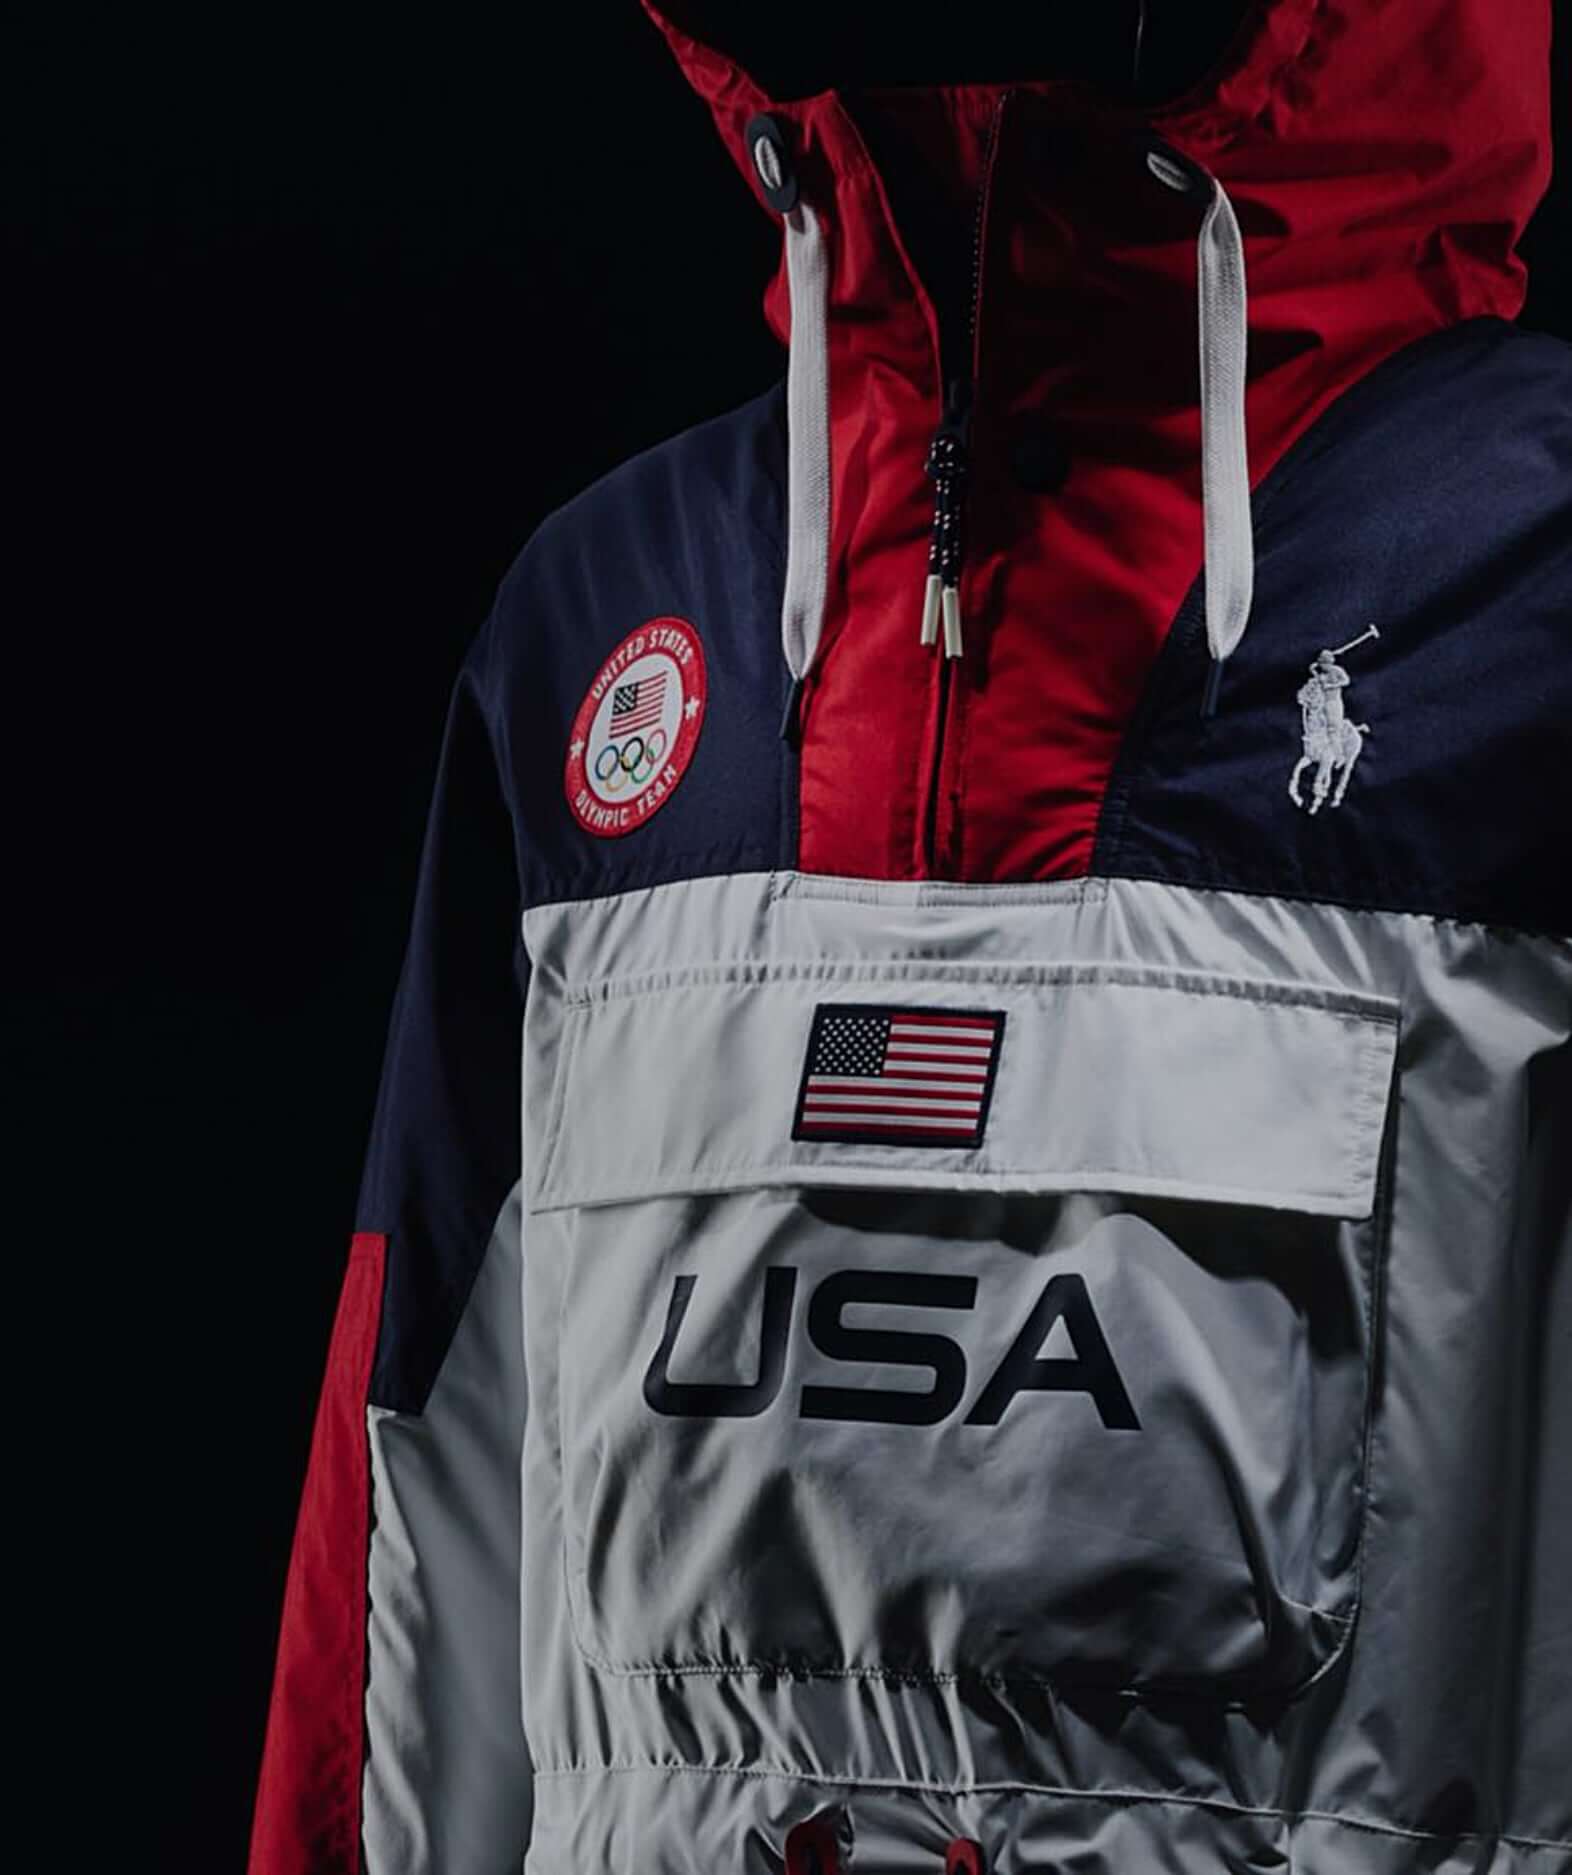 Official Team USA Clothing, Gear - Beijing 2022 Winter Olympics | Valet.